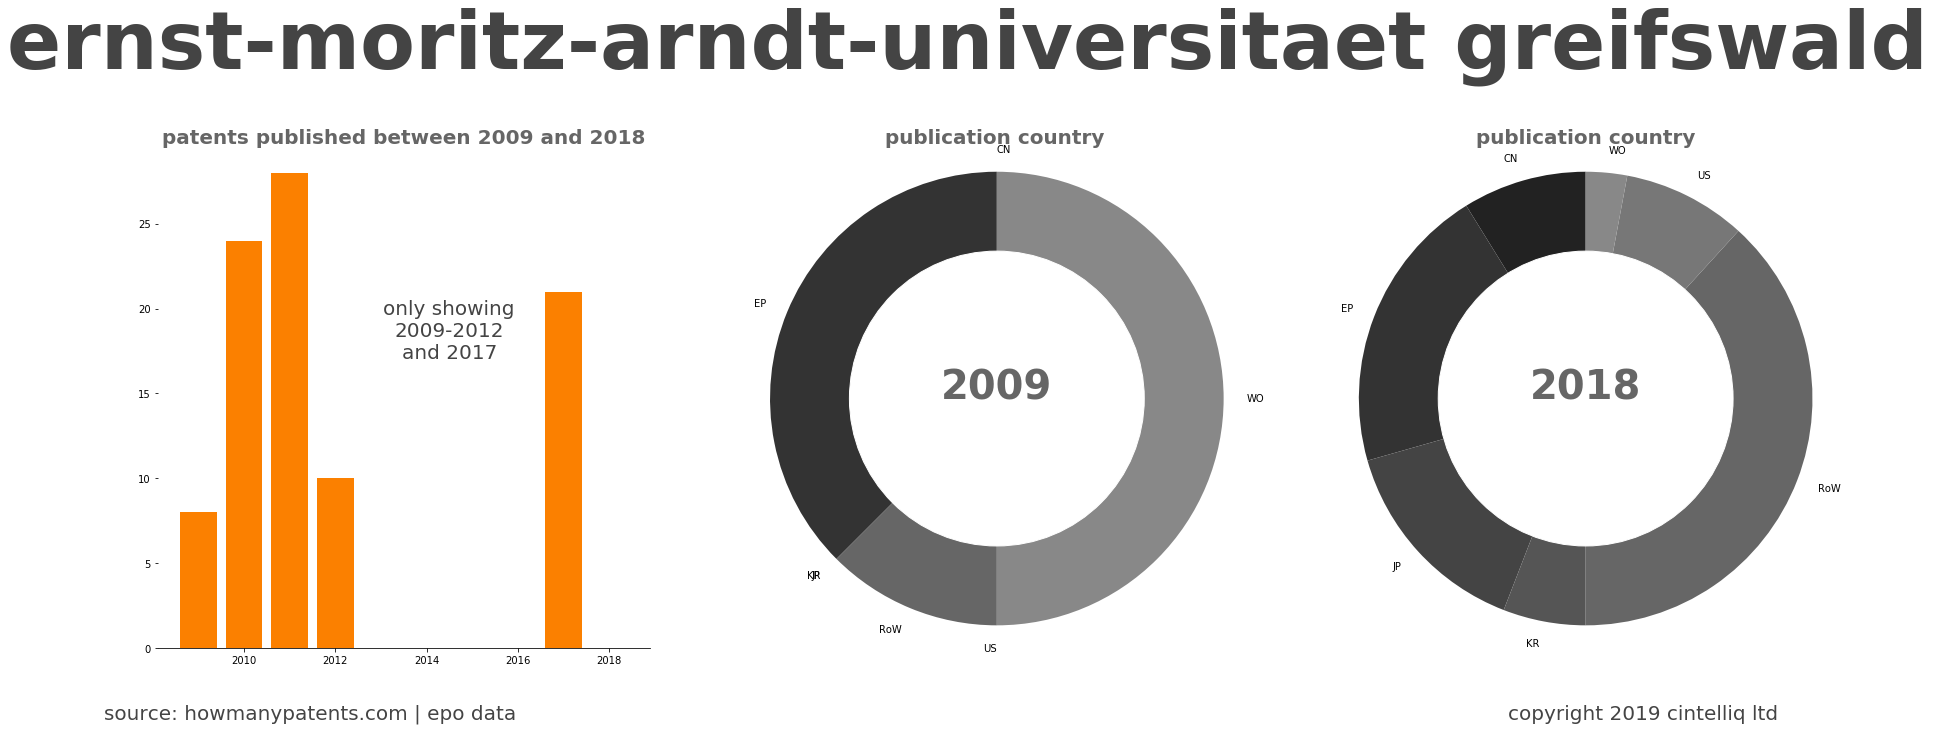 summary of patents for Ernst-Moritz-Arndt-Universitaet Greifswald